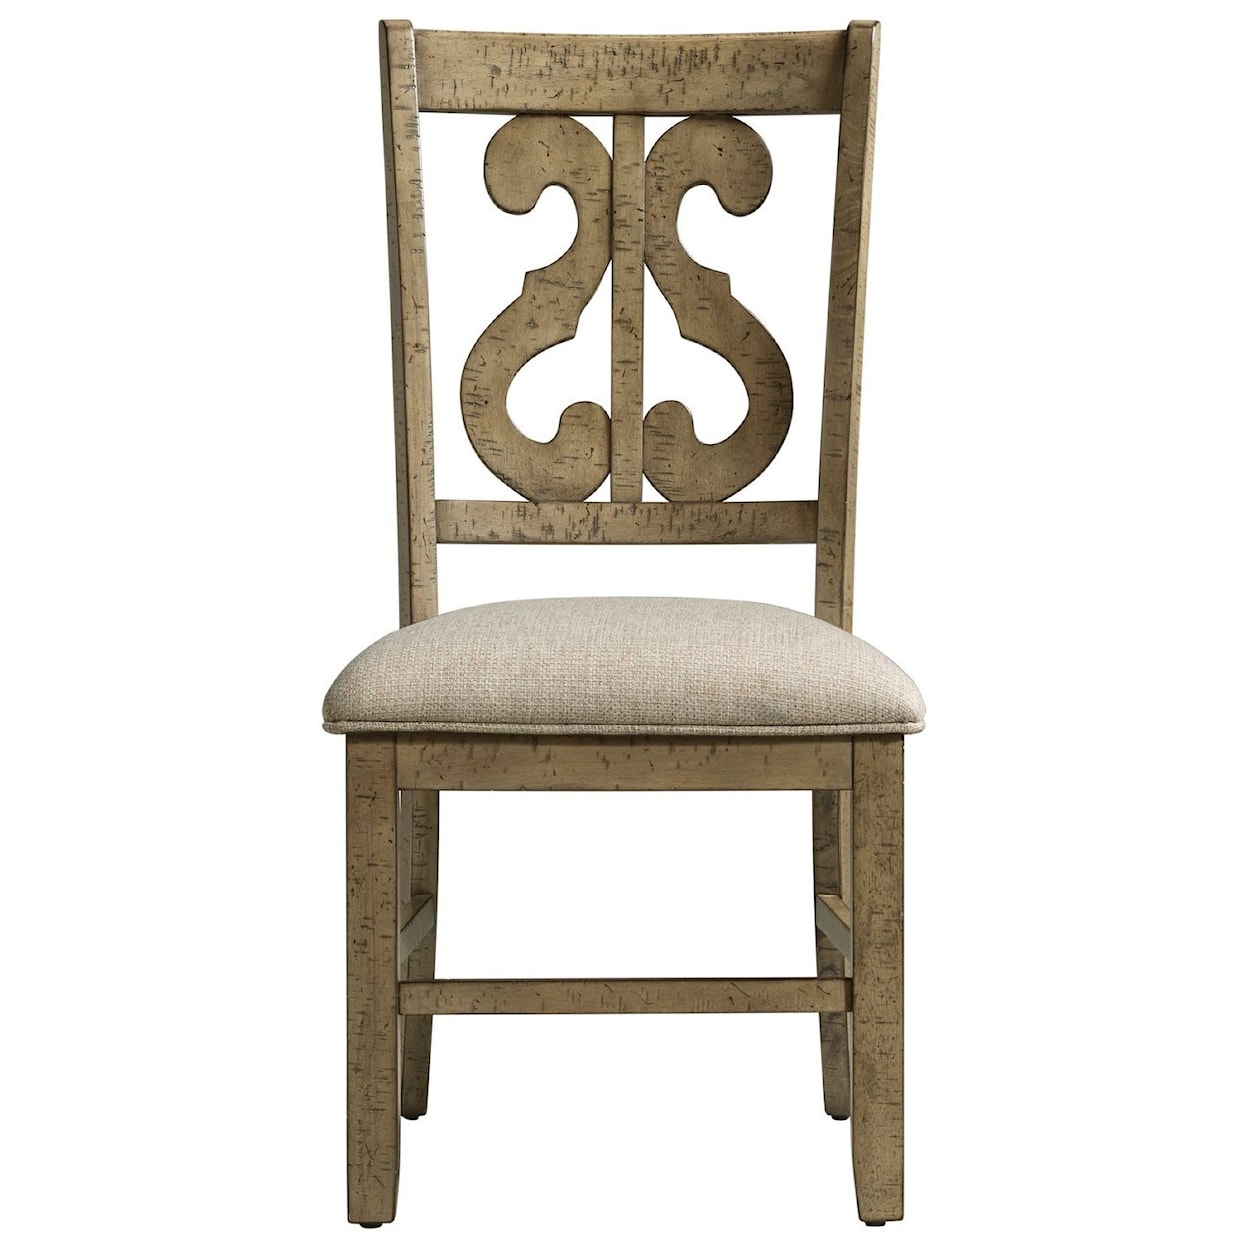 VFM Basics Stone Dining Side Chair